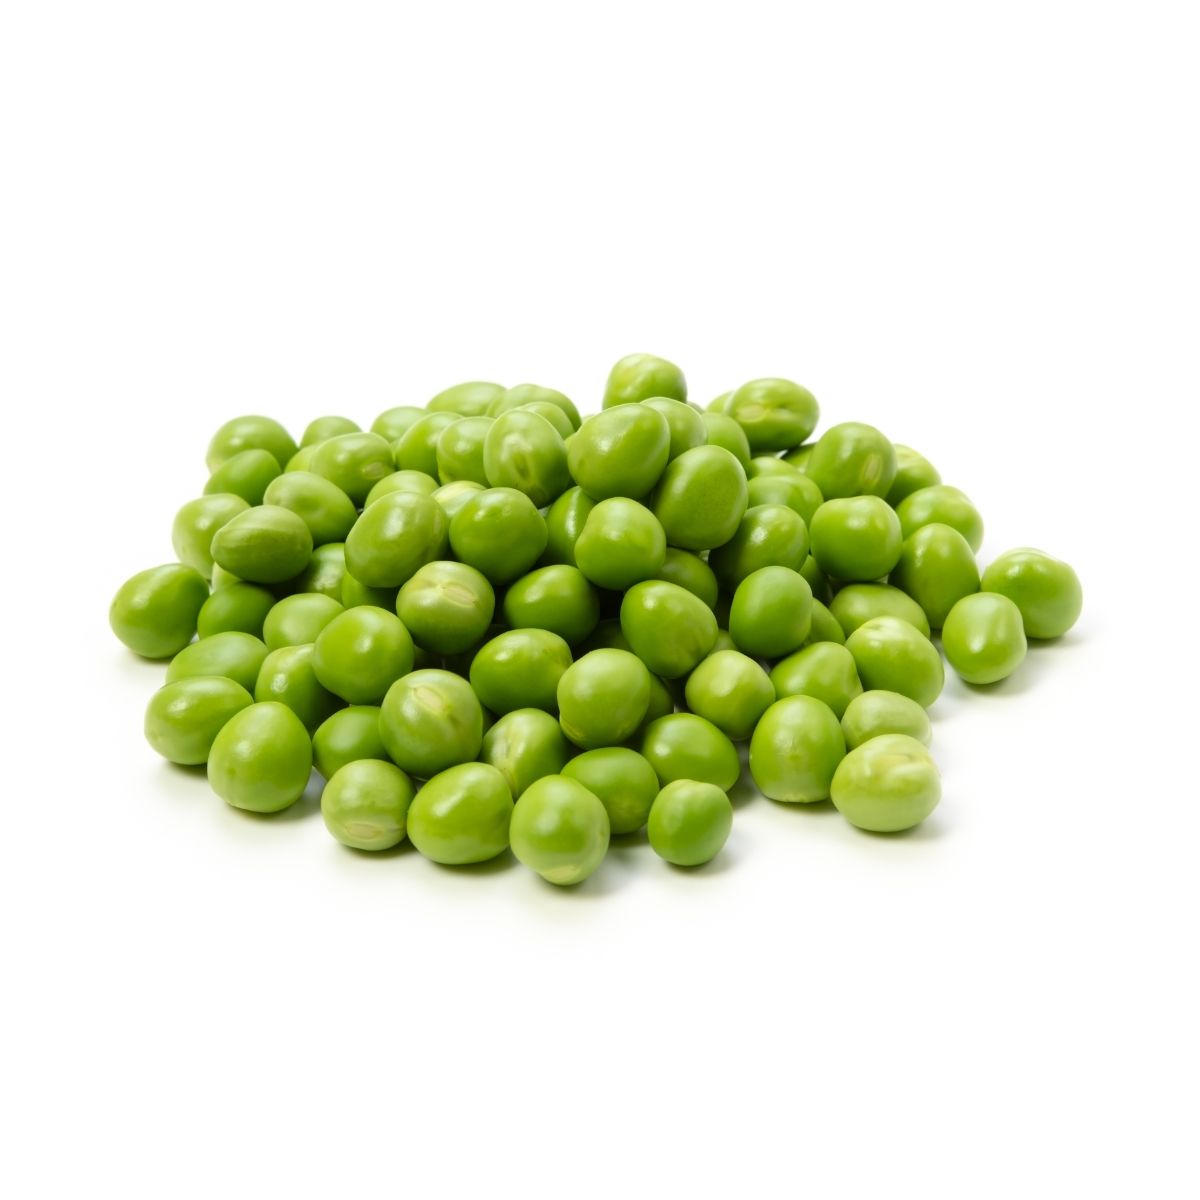 green peas shelled.jpg